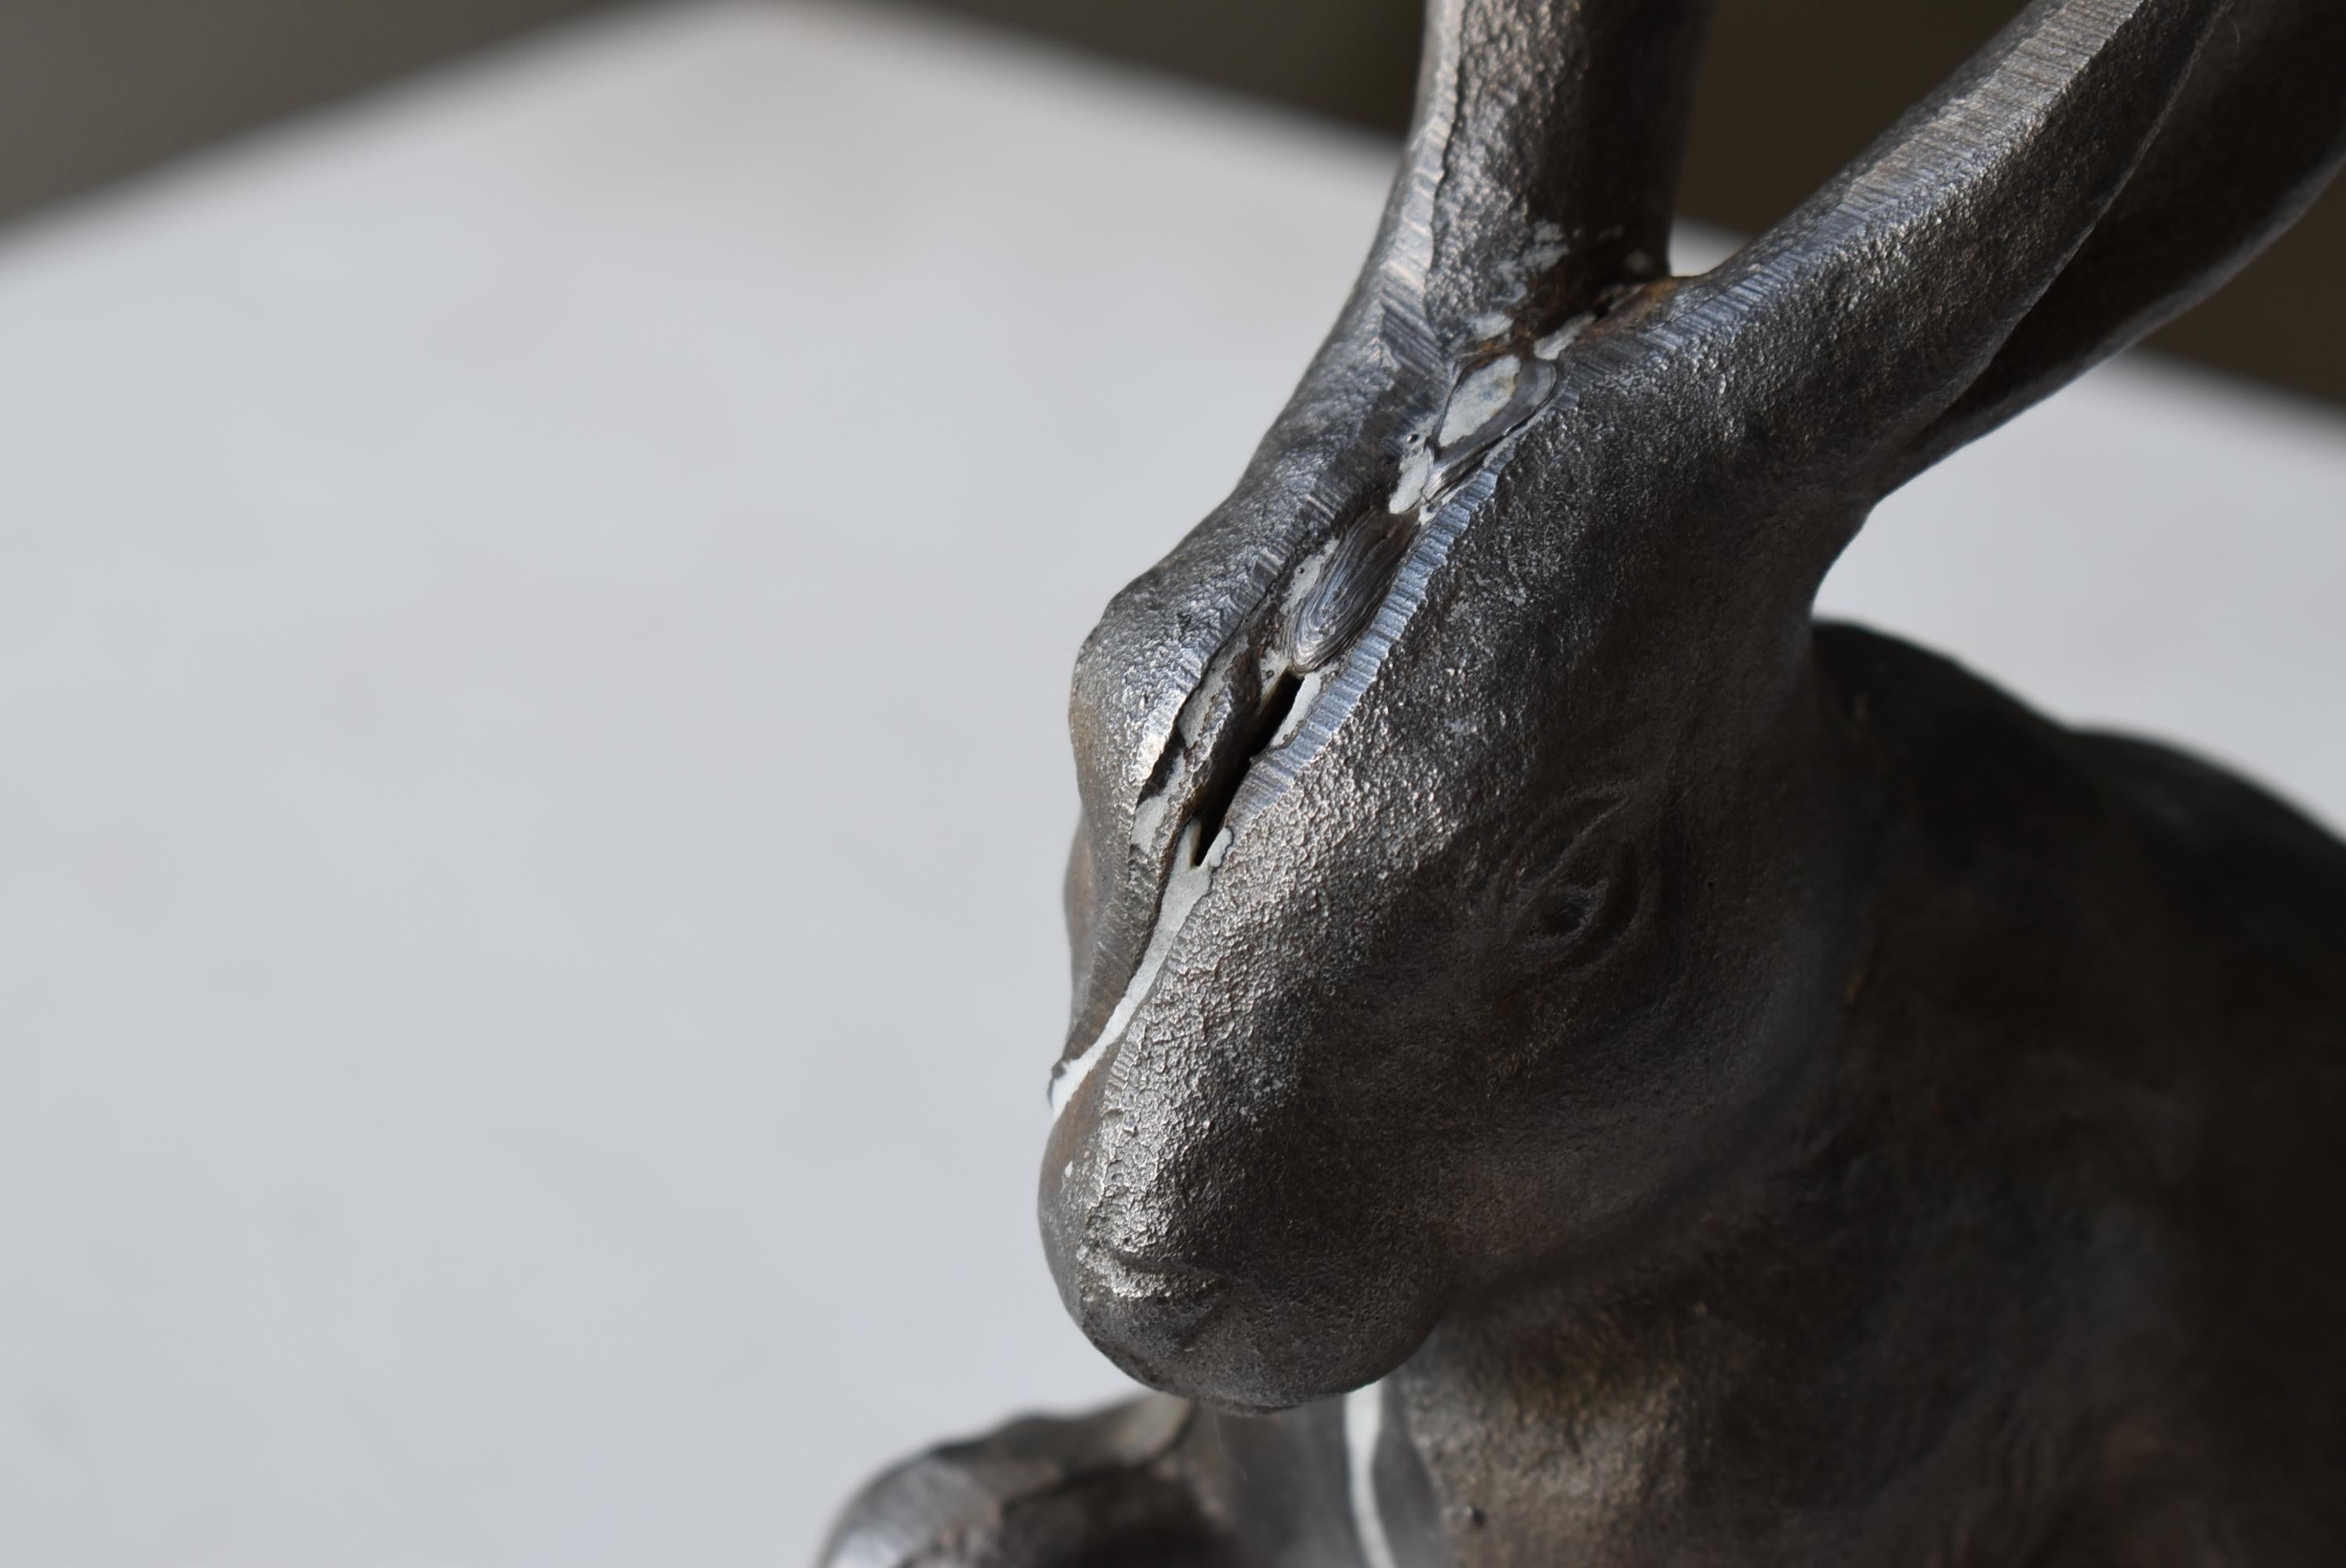 Japanese Old Iron Rabbit 1940s-1970s / Sculpture Figurine Object Wabi Sabi For Sale 3